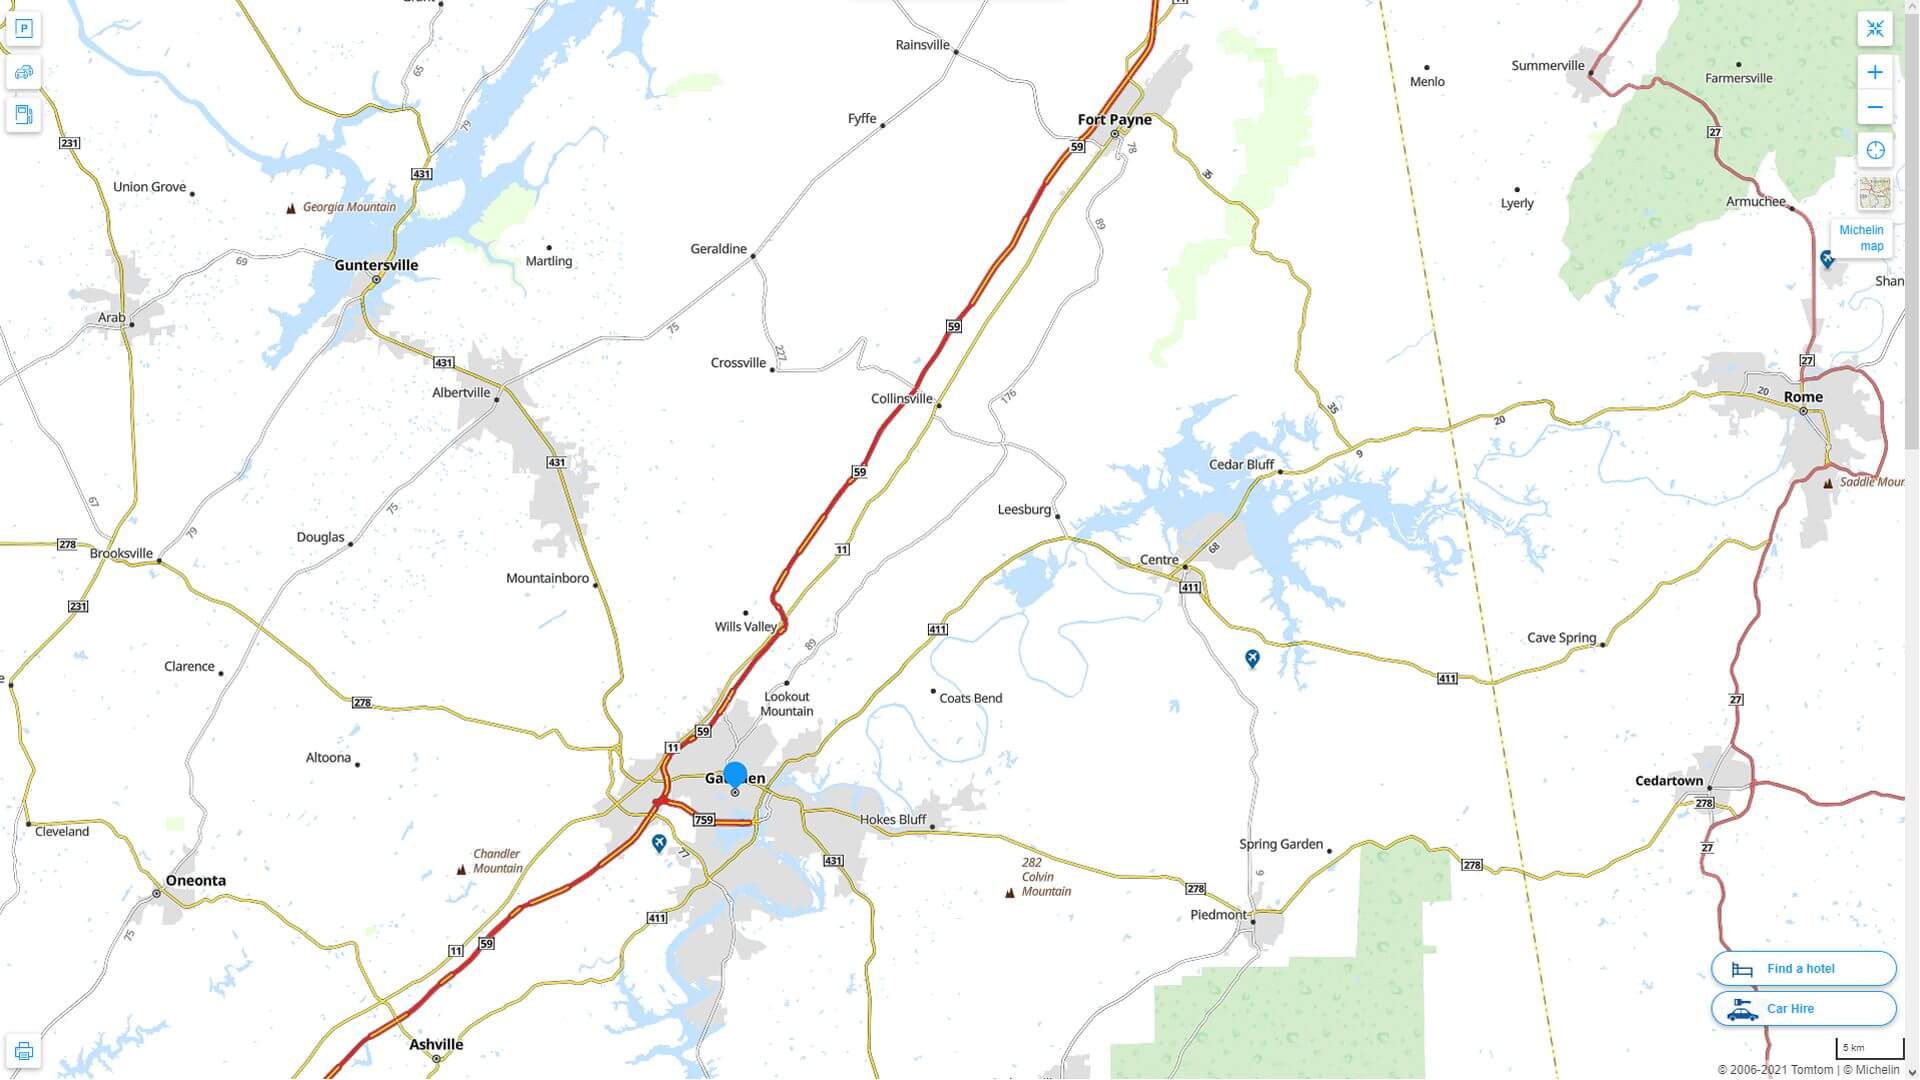 Gadsden Alabama Highway and Road Map